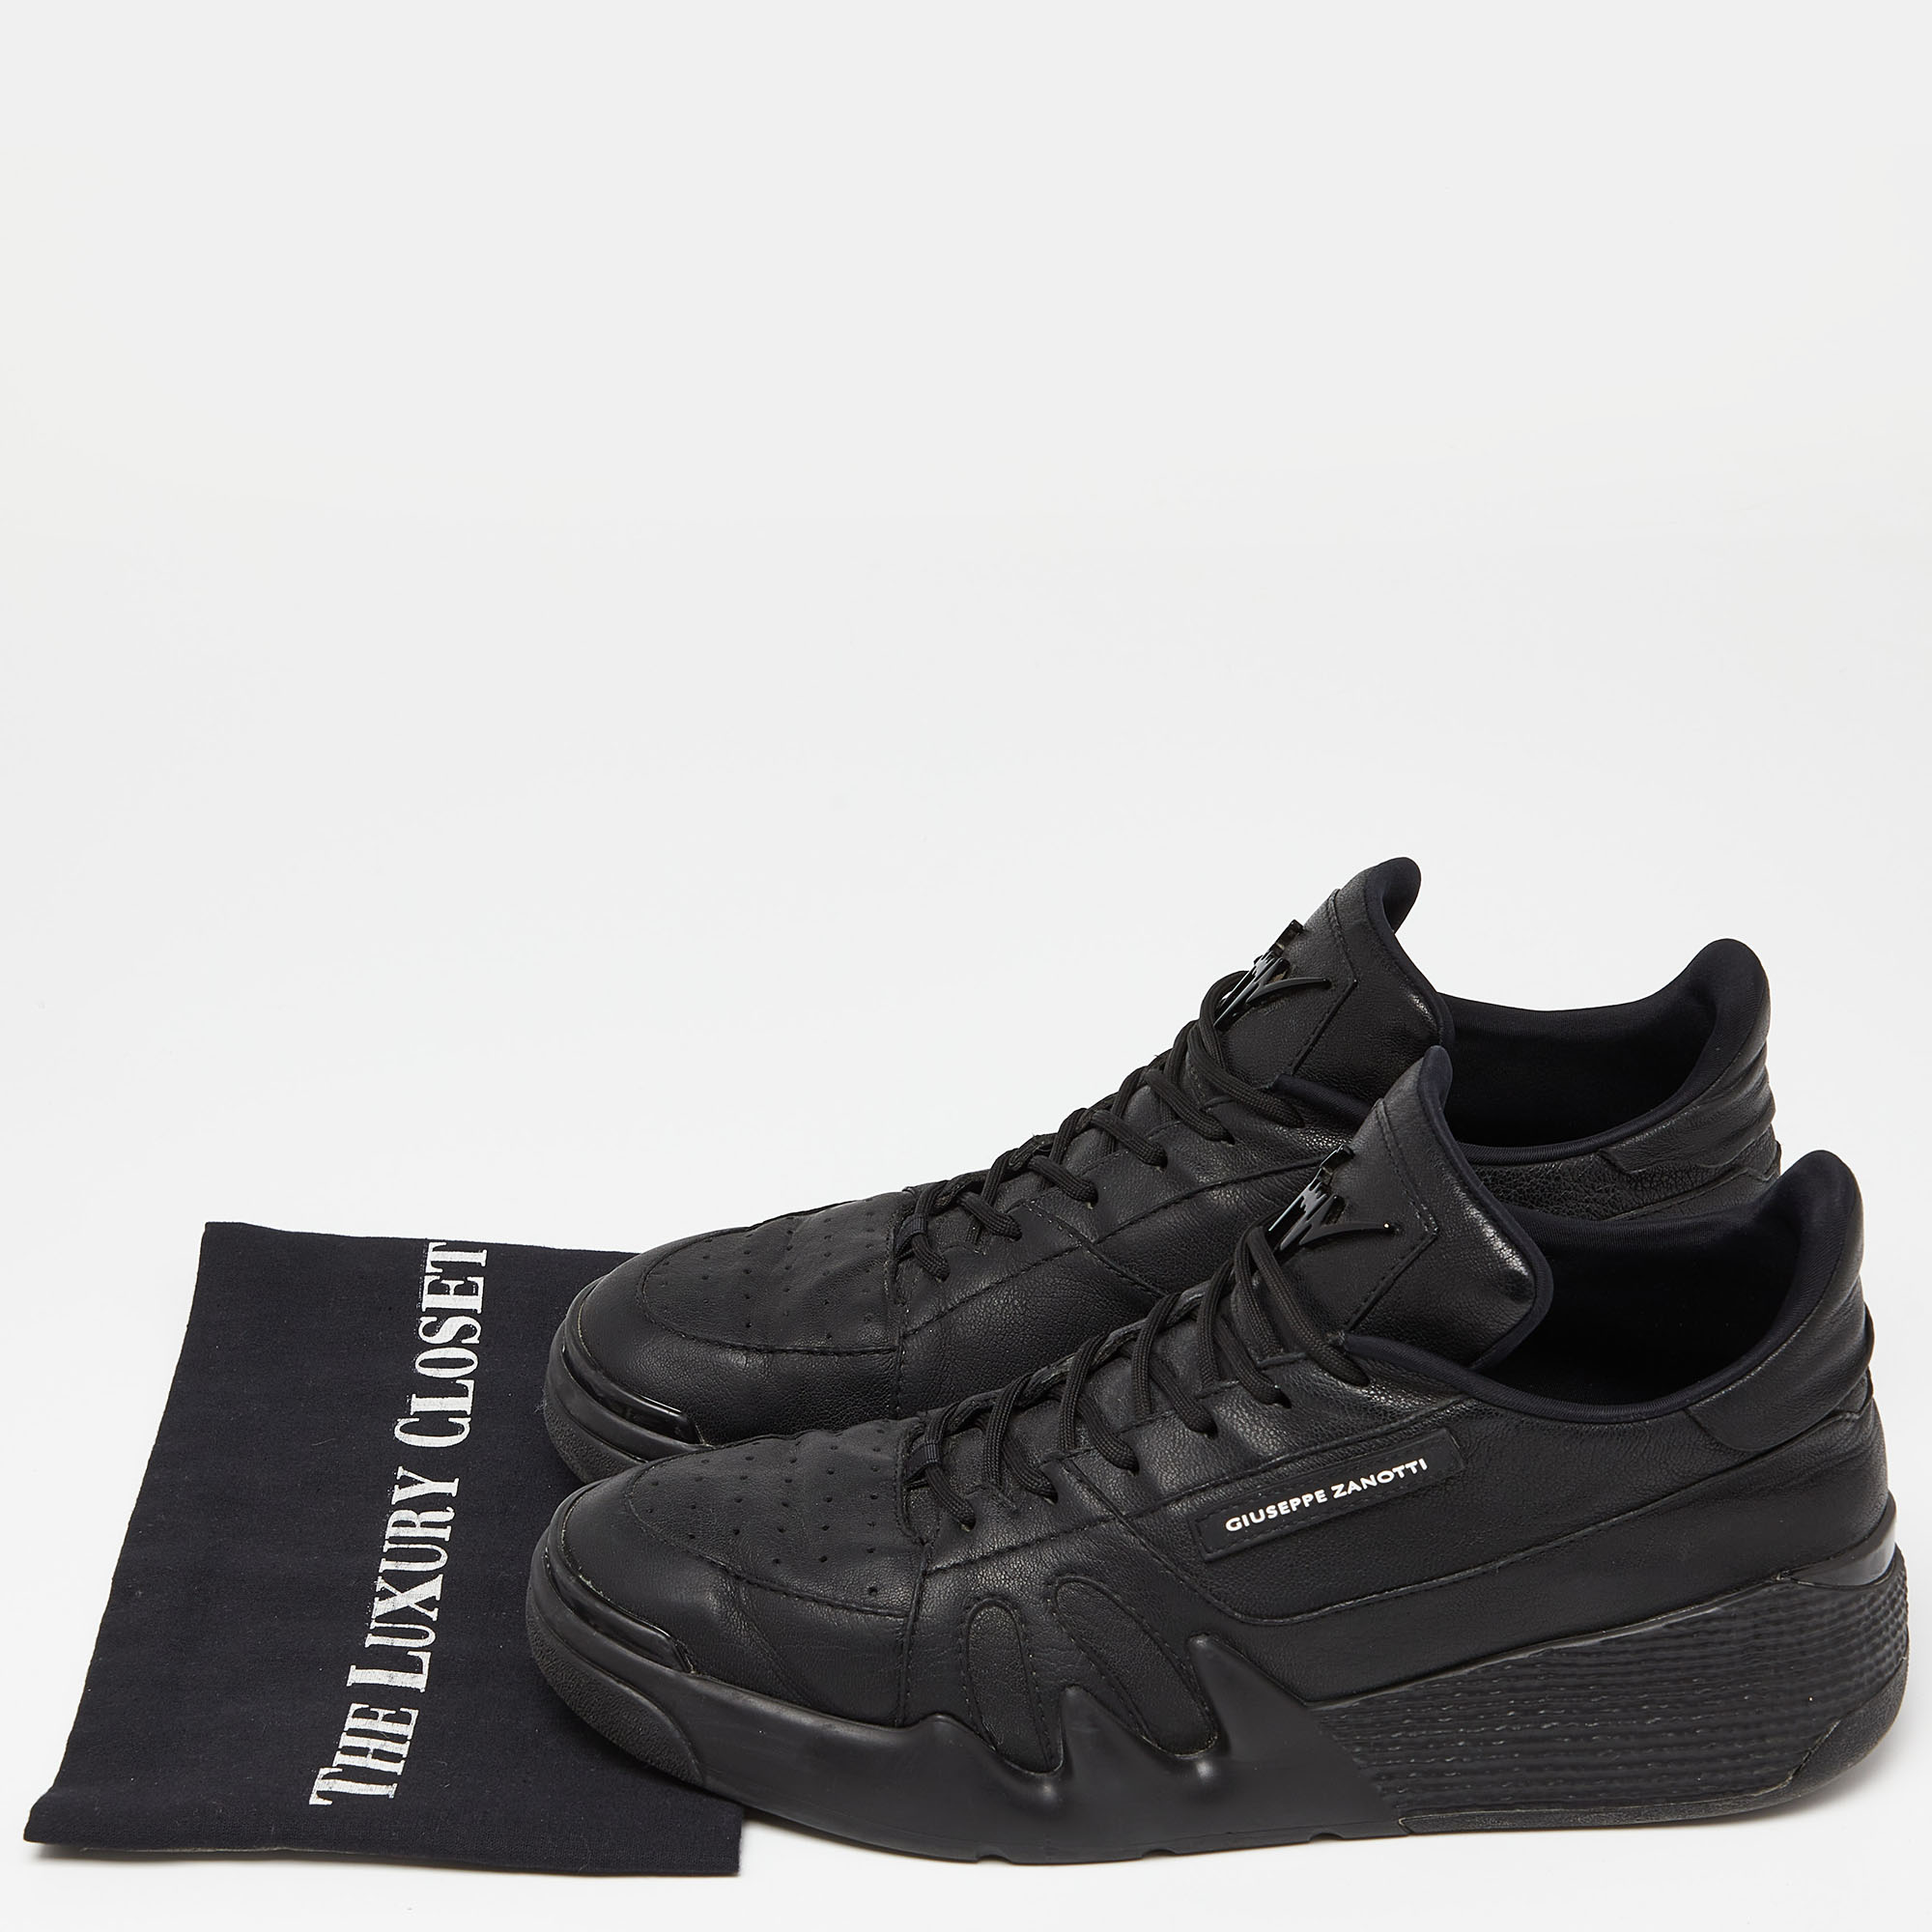 Giuseppe Zanotti Black Leather Talon Low Top Sneakers Size 44